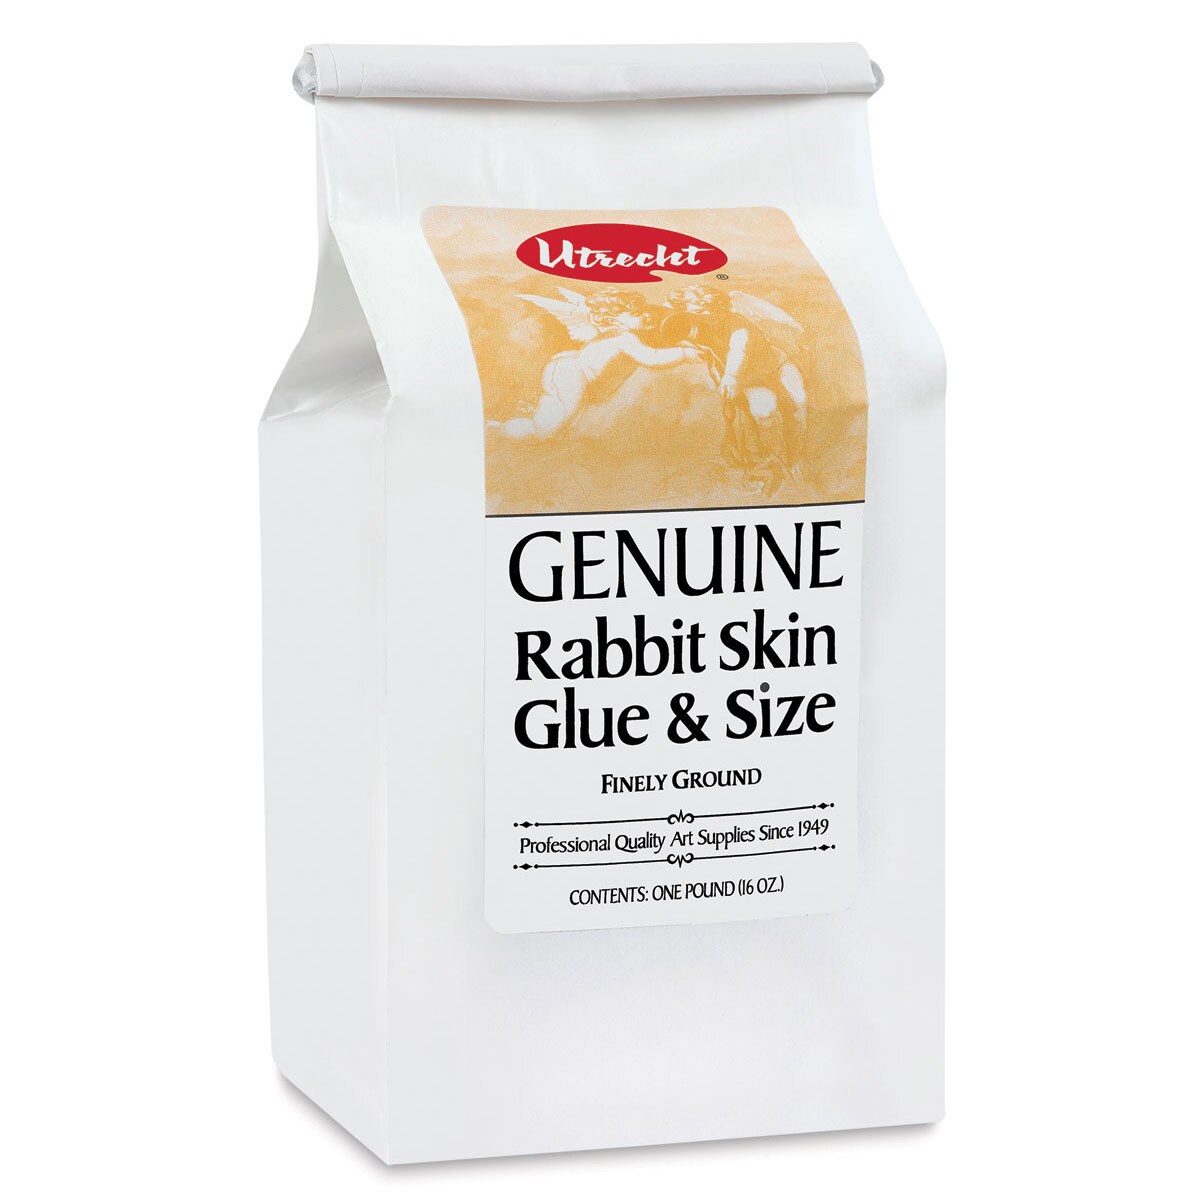 Utrecht Rabbit Skin Glue &#x26; Size - 1 lb bag